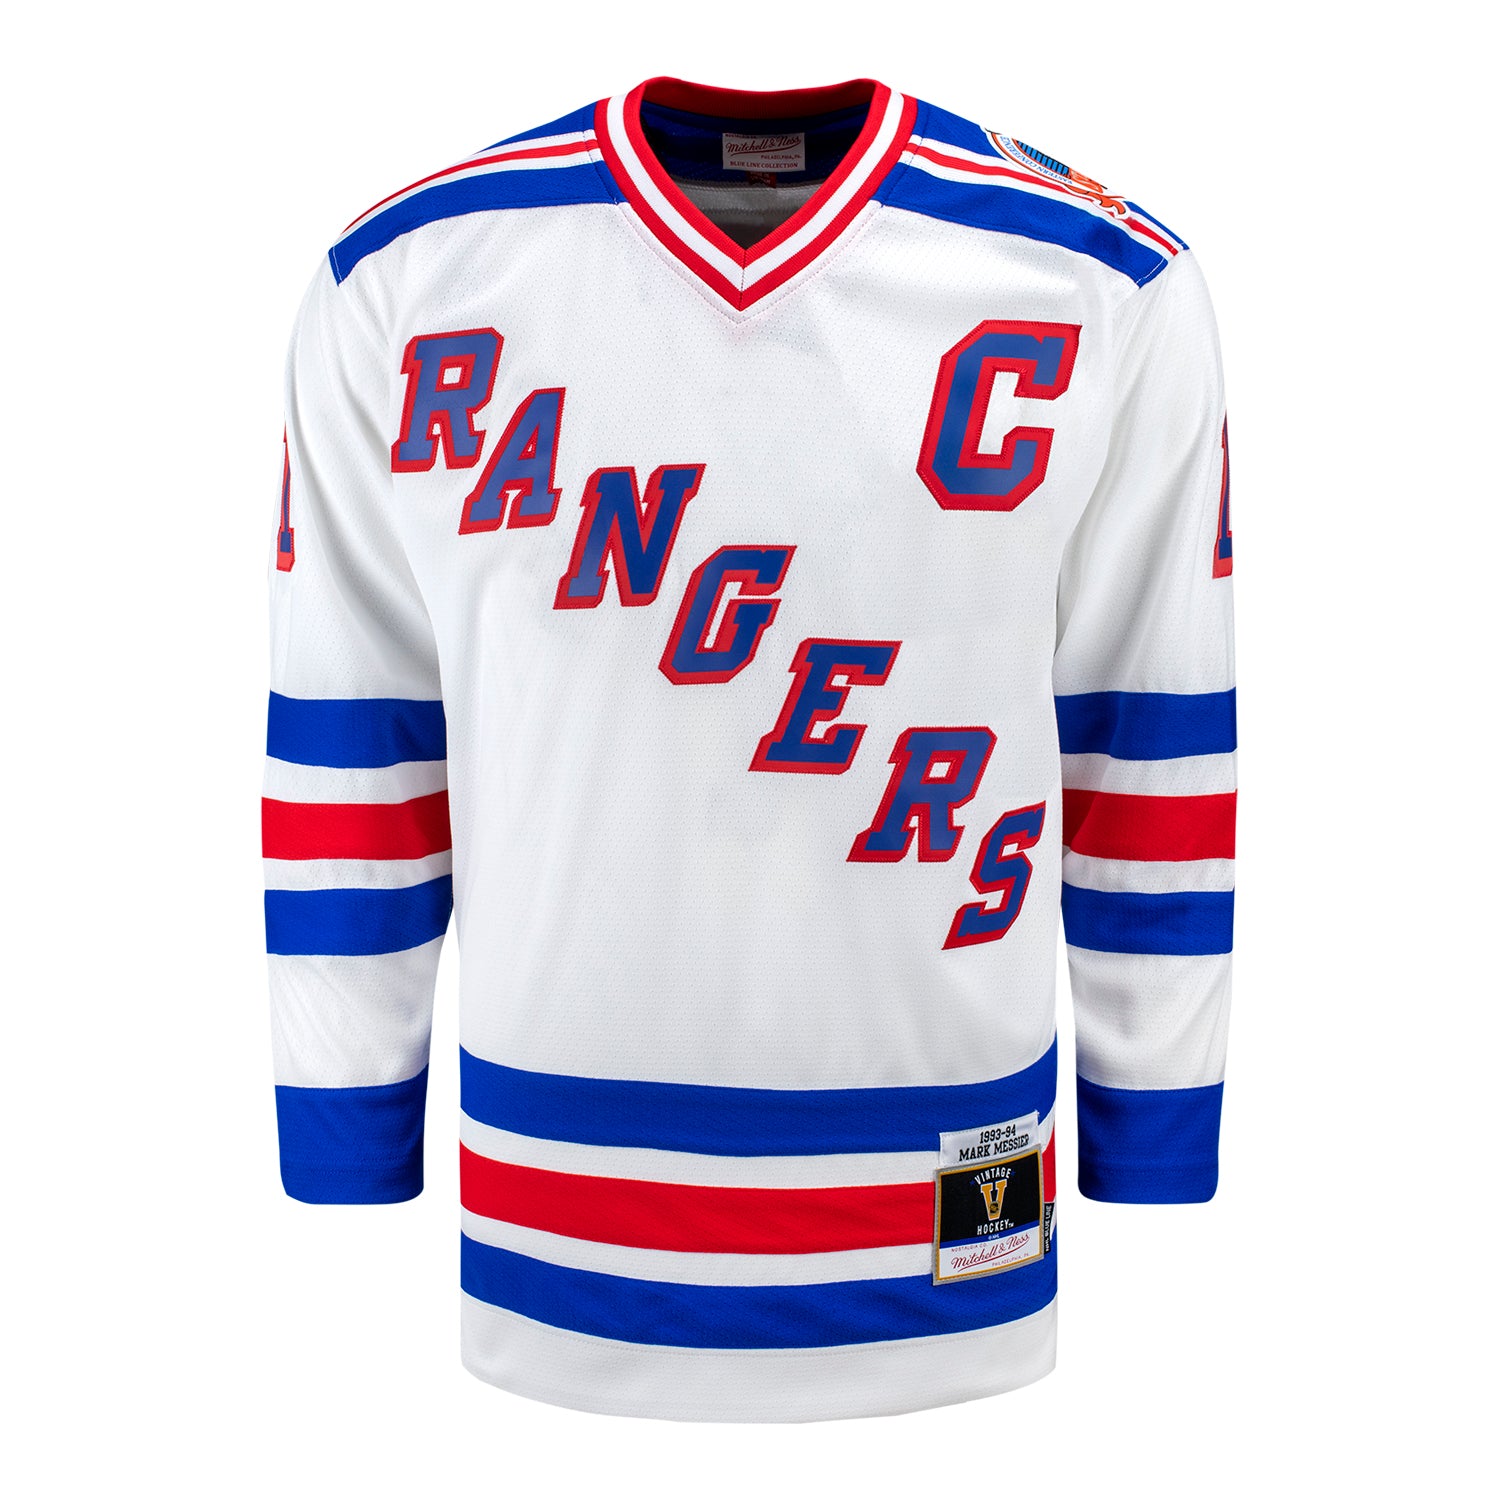 Vintage Rangers gear